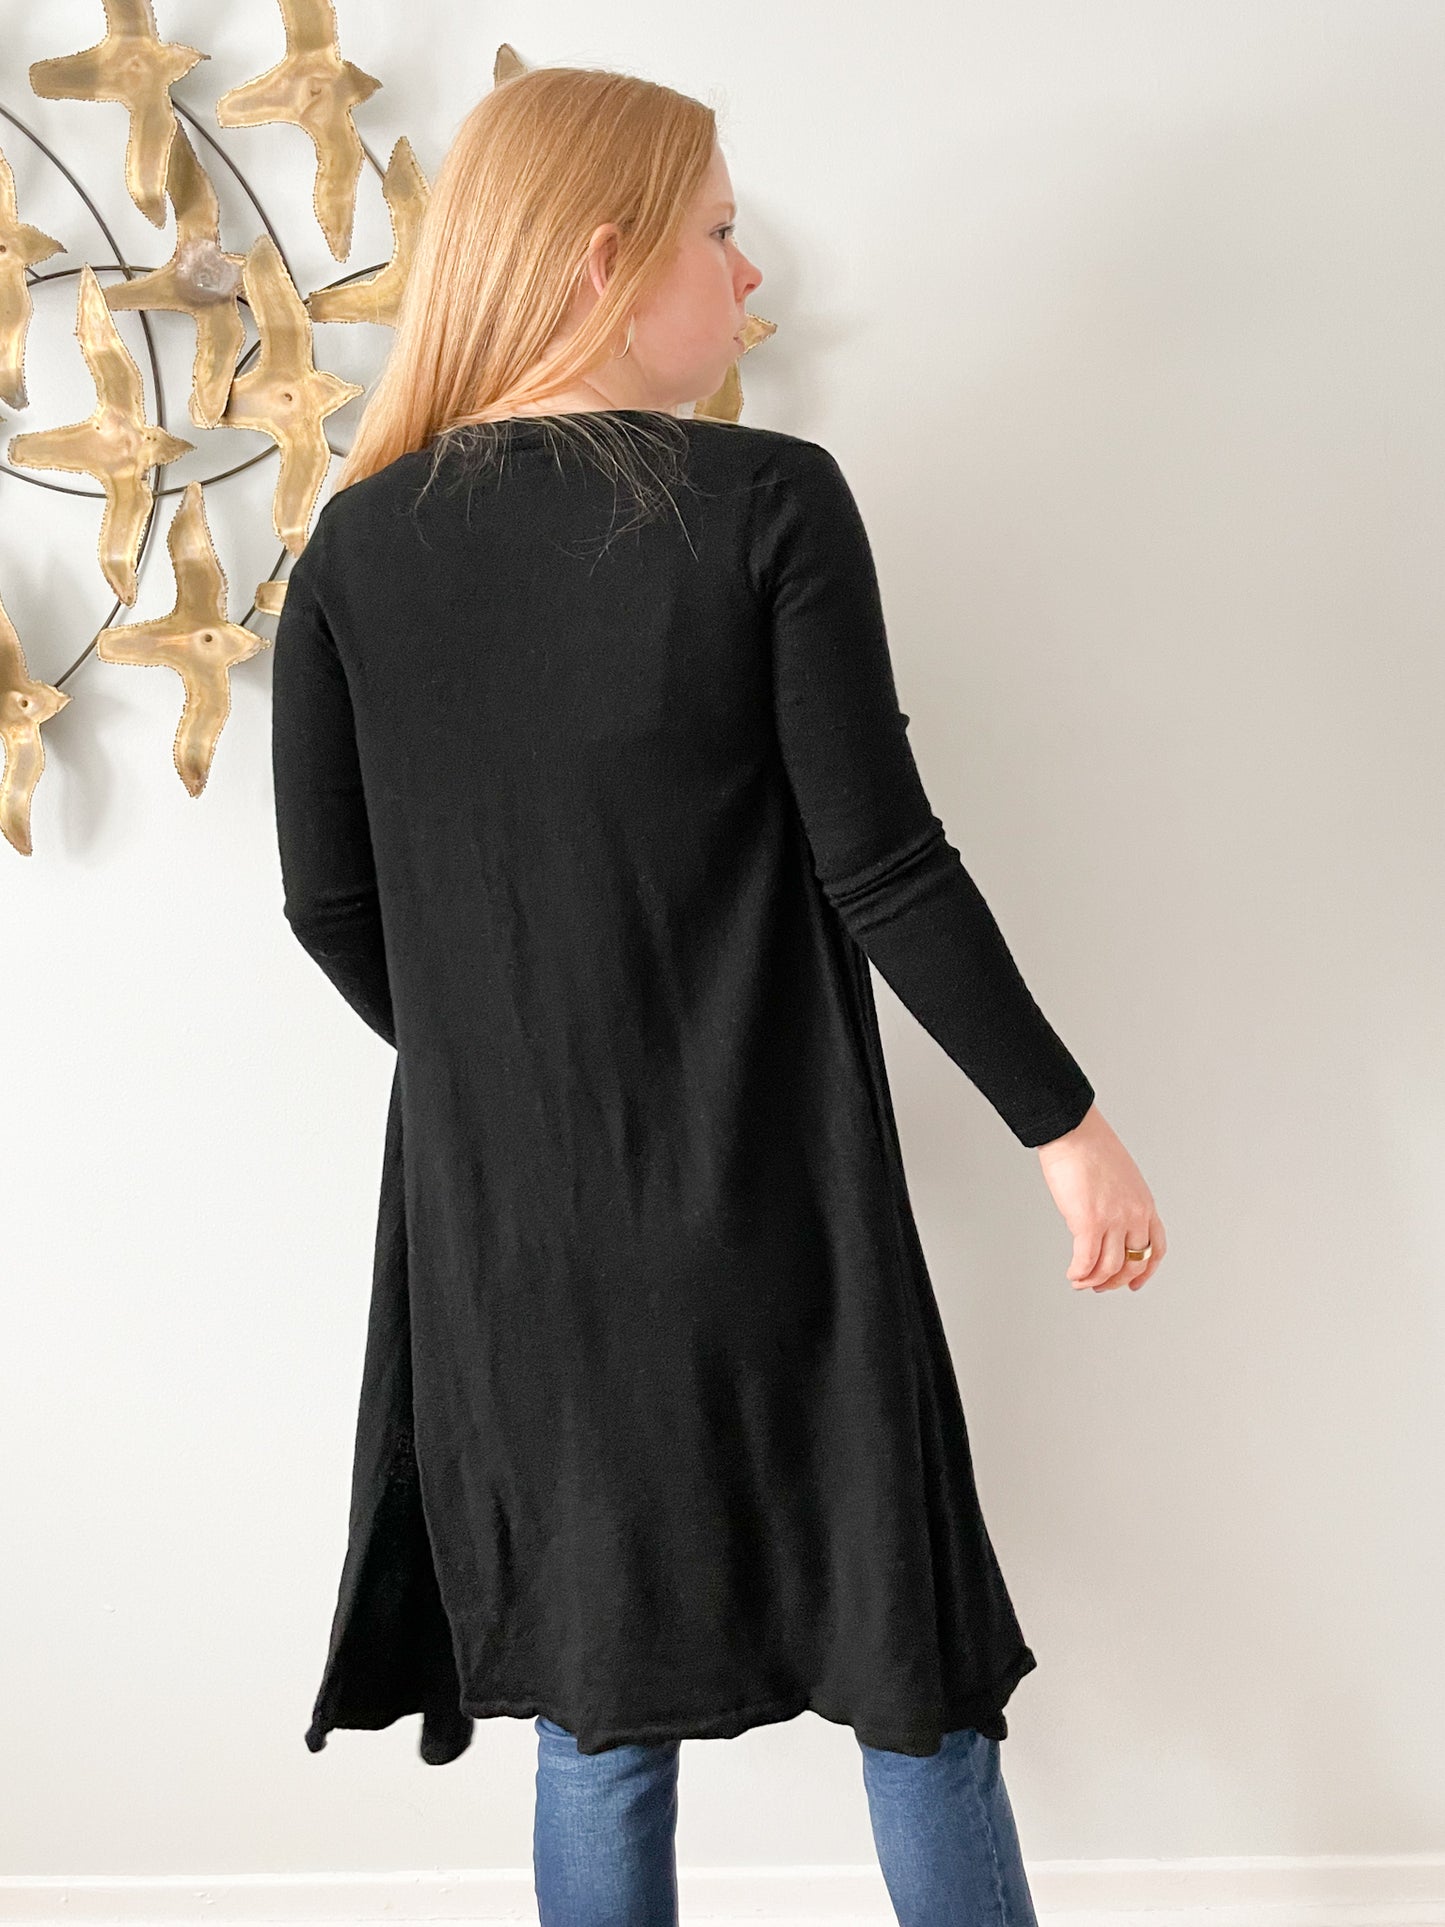 TAHARI Black 100% Extrafine Merino Wool Long Open Cardigan Sweater - S/M